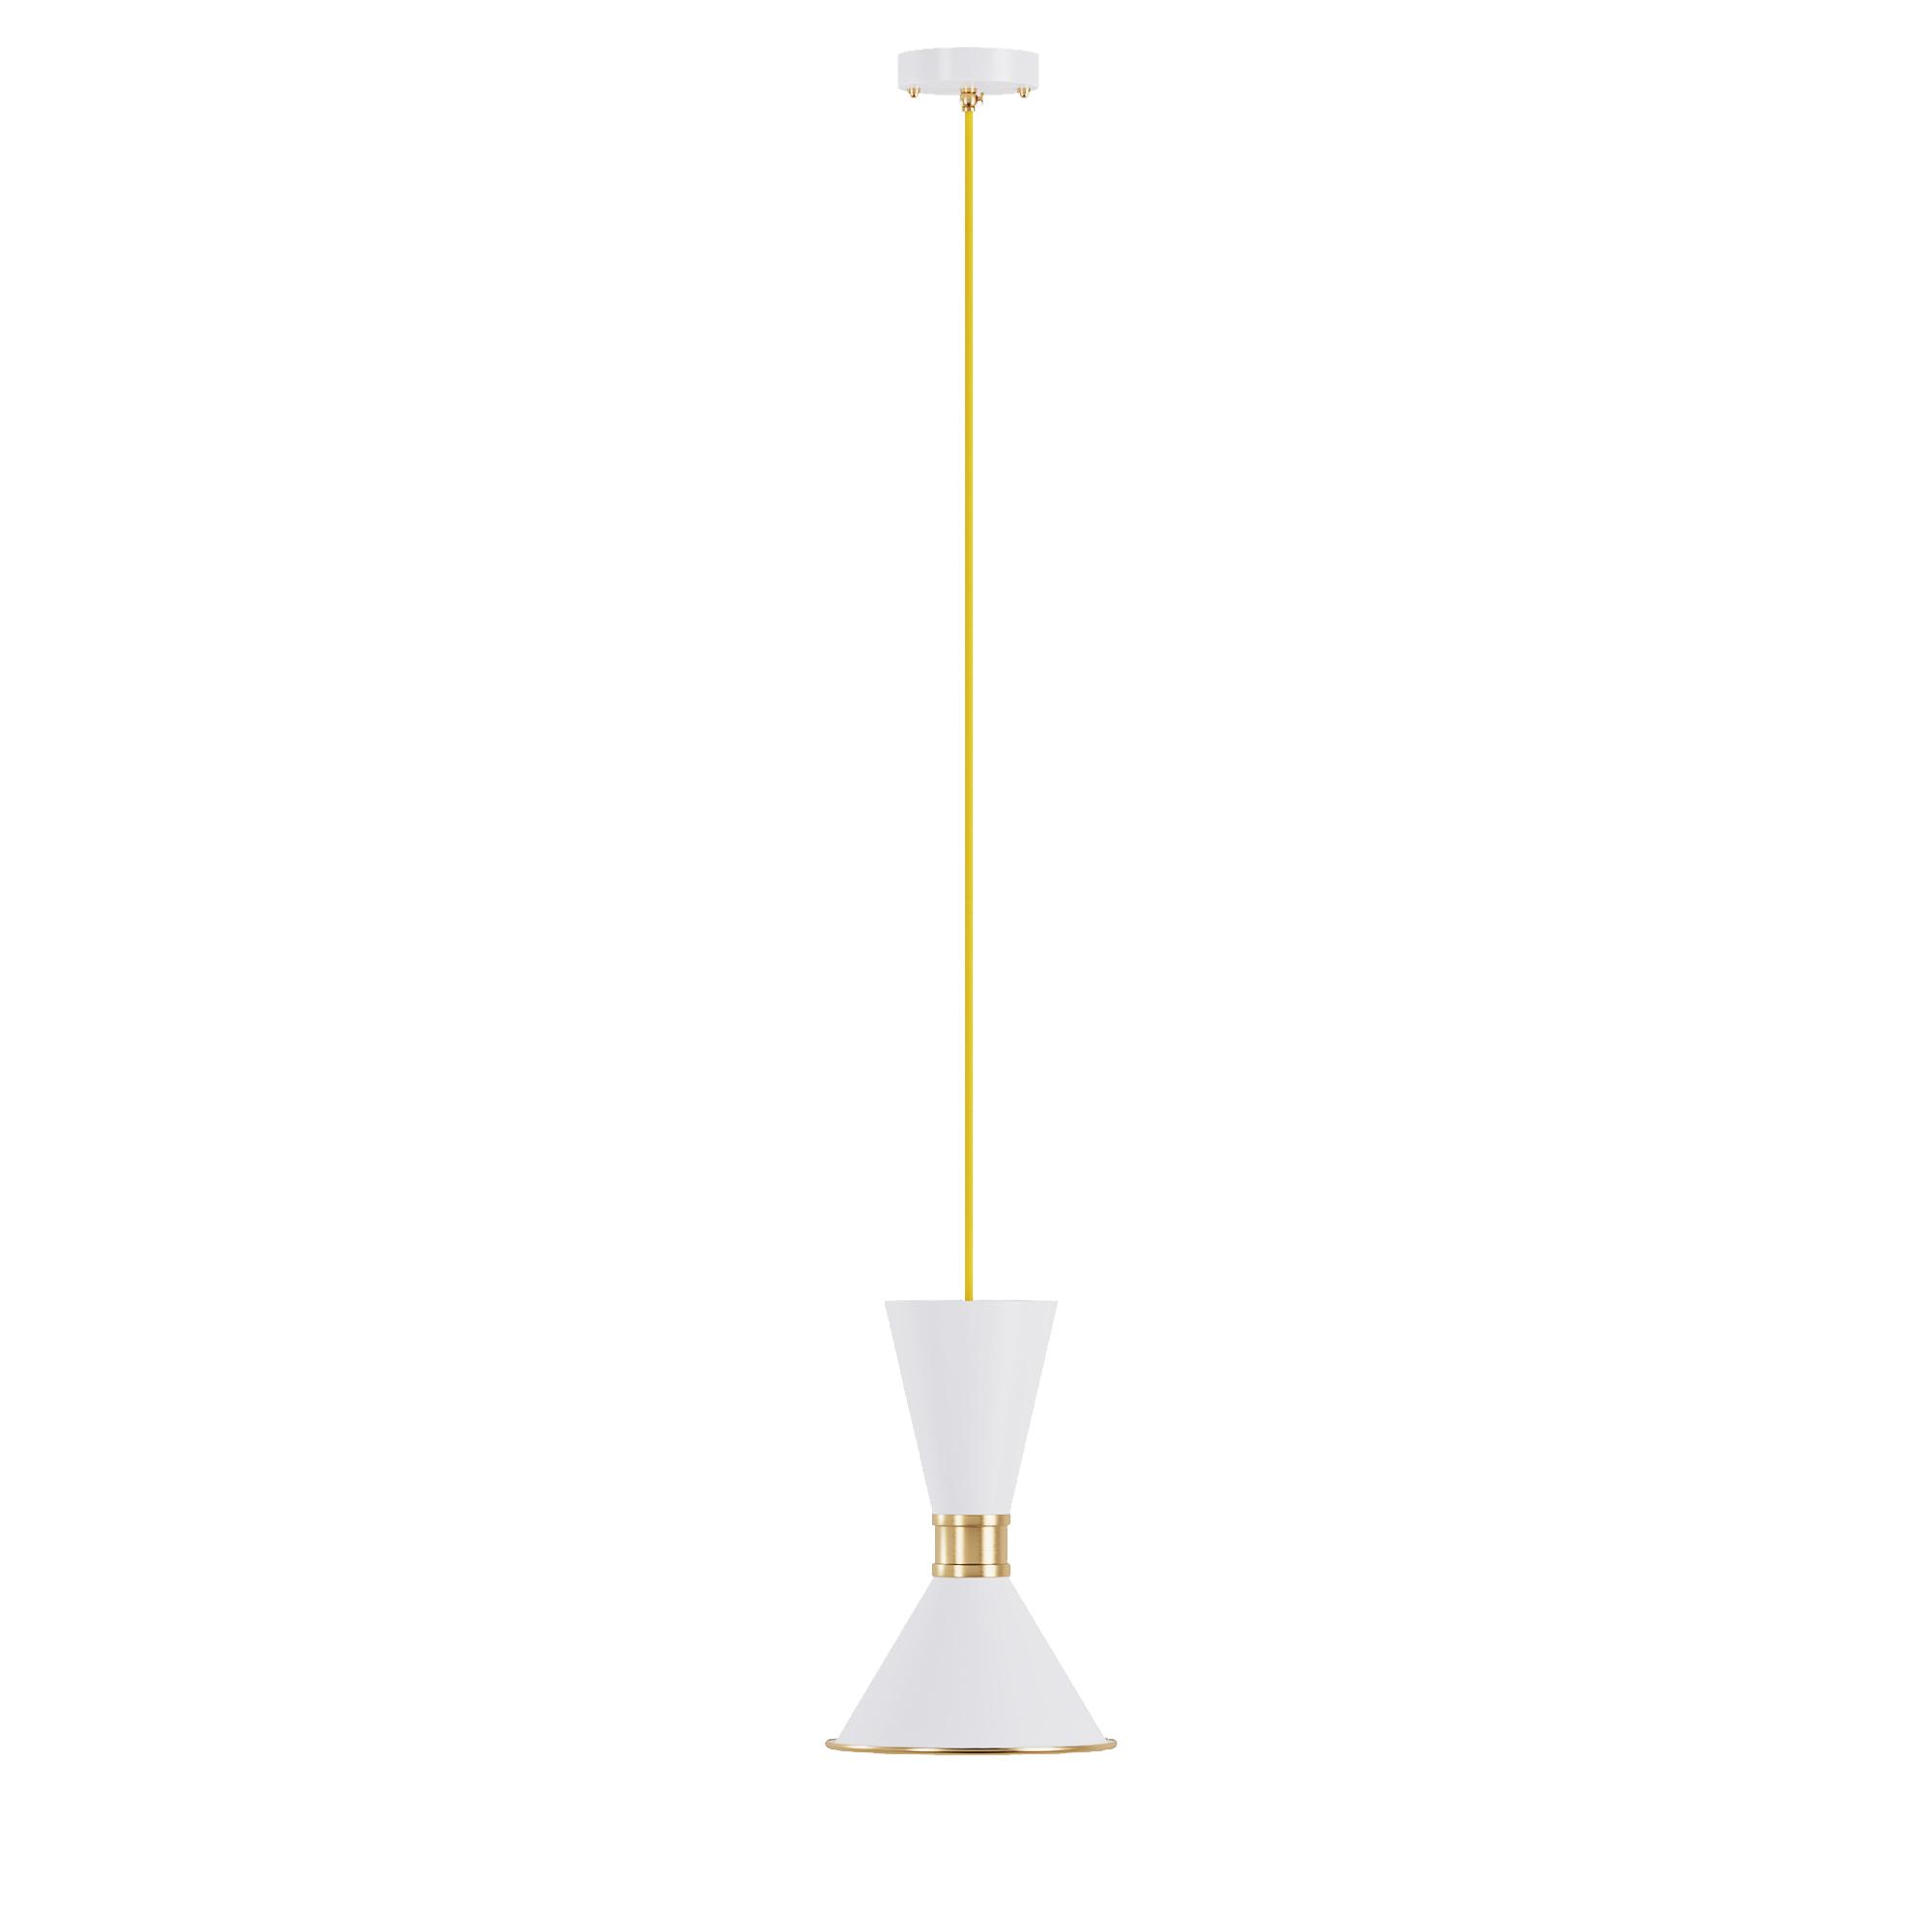 Dualight lamp, SKU. 12515 by Pikartlights 3d model